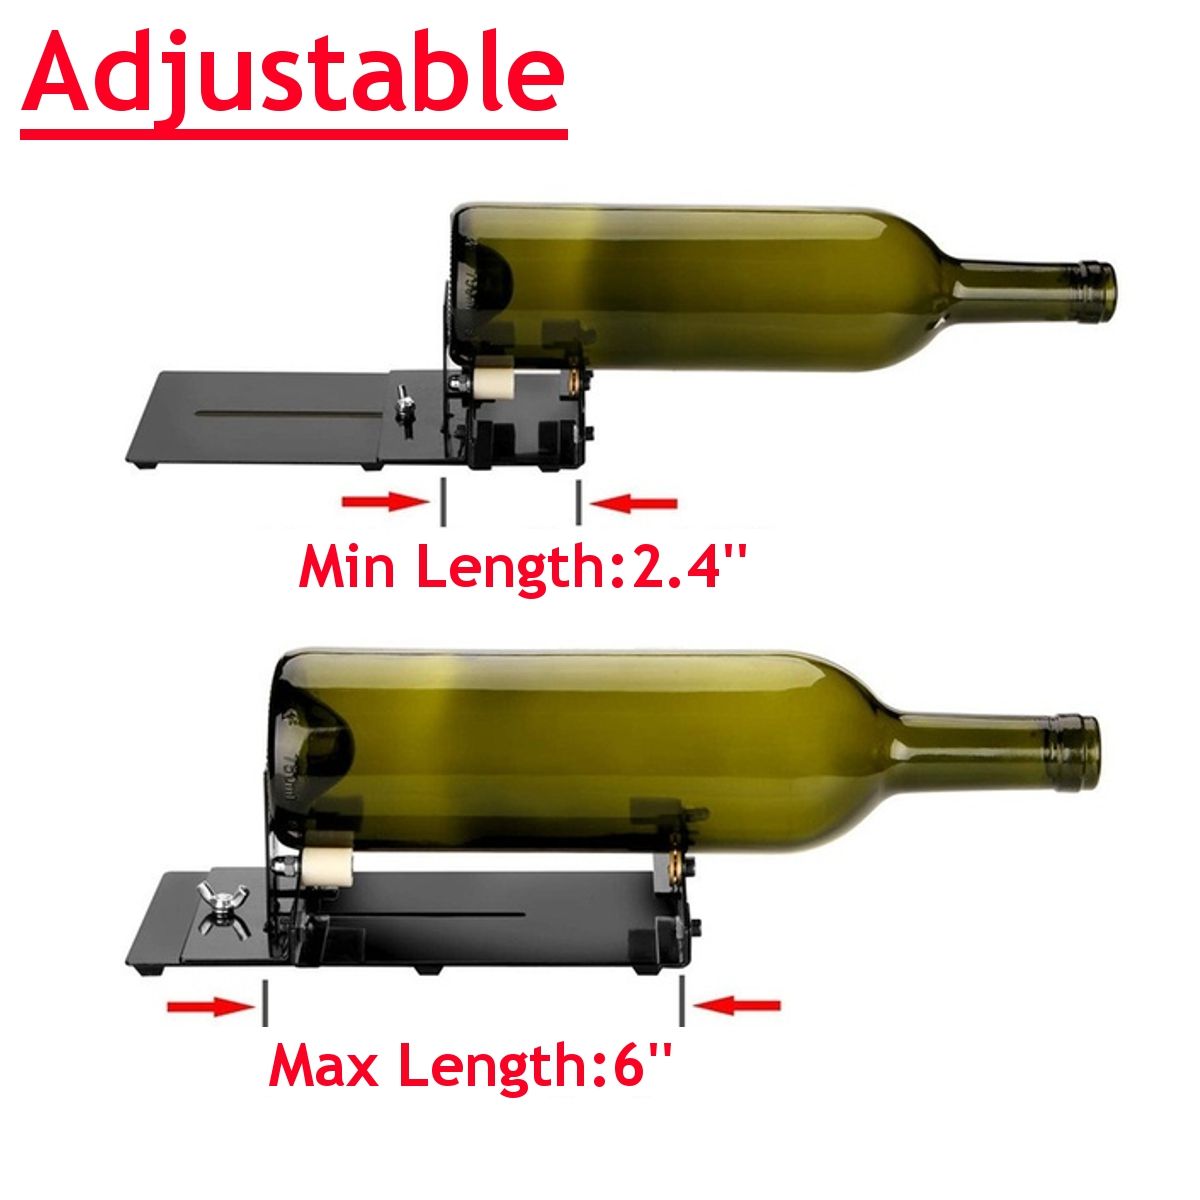 Stainless-Steel-Glass-Bottle-Cutter-Machine-W-ine-B-eer-Glass-Bottles-Cutting-Tool-1589604